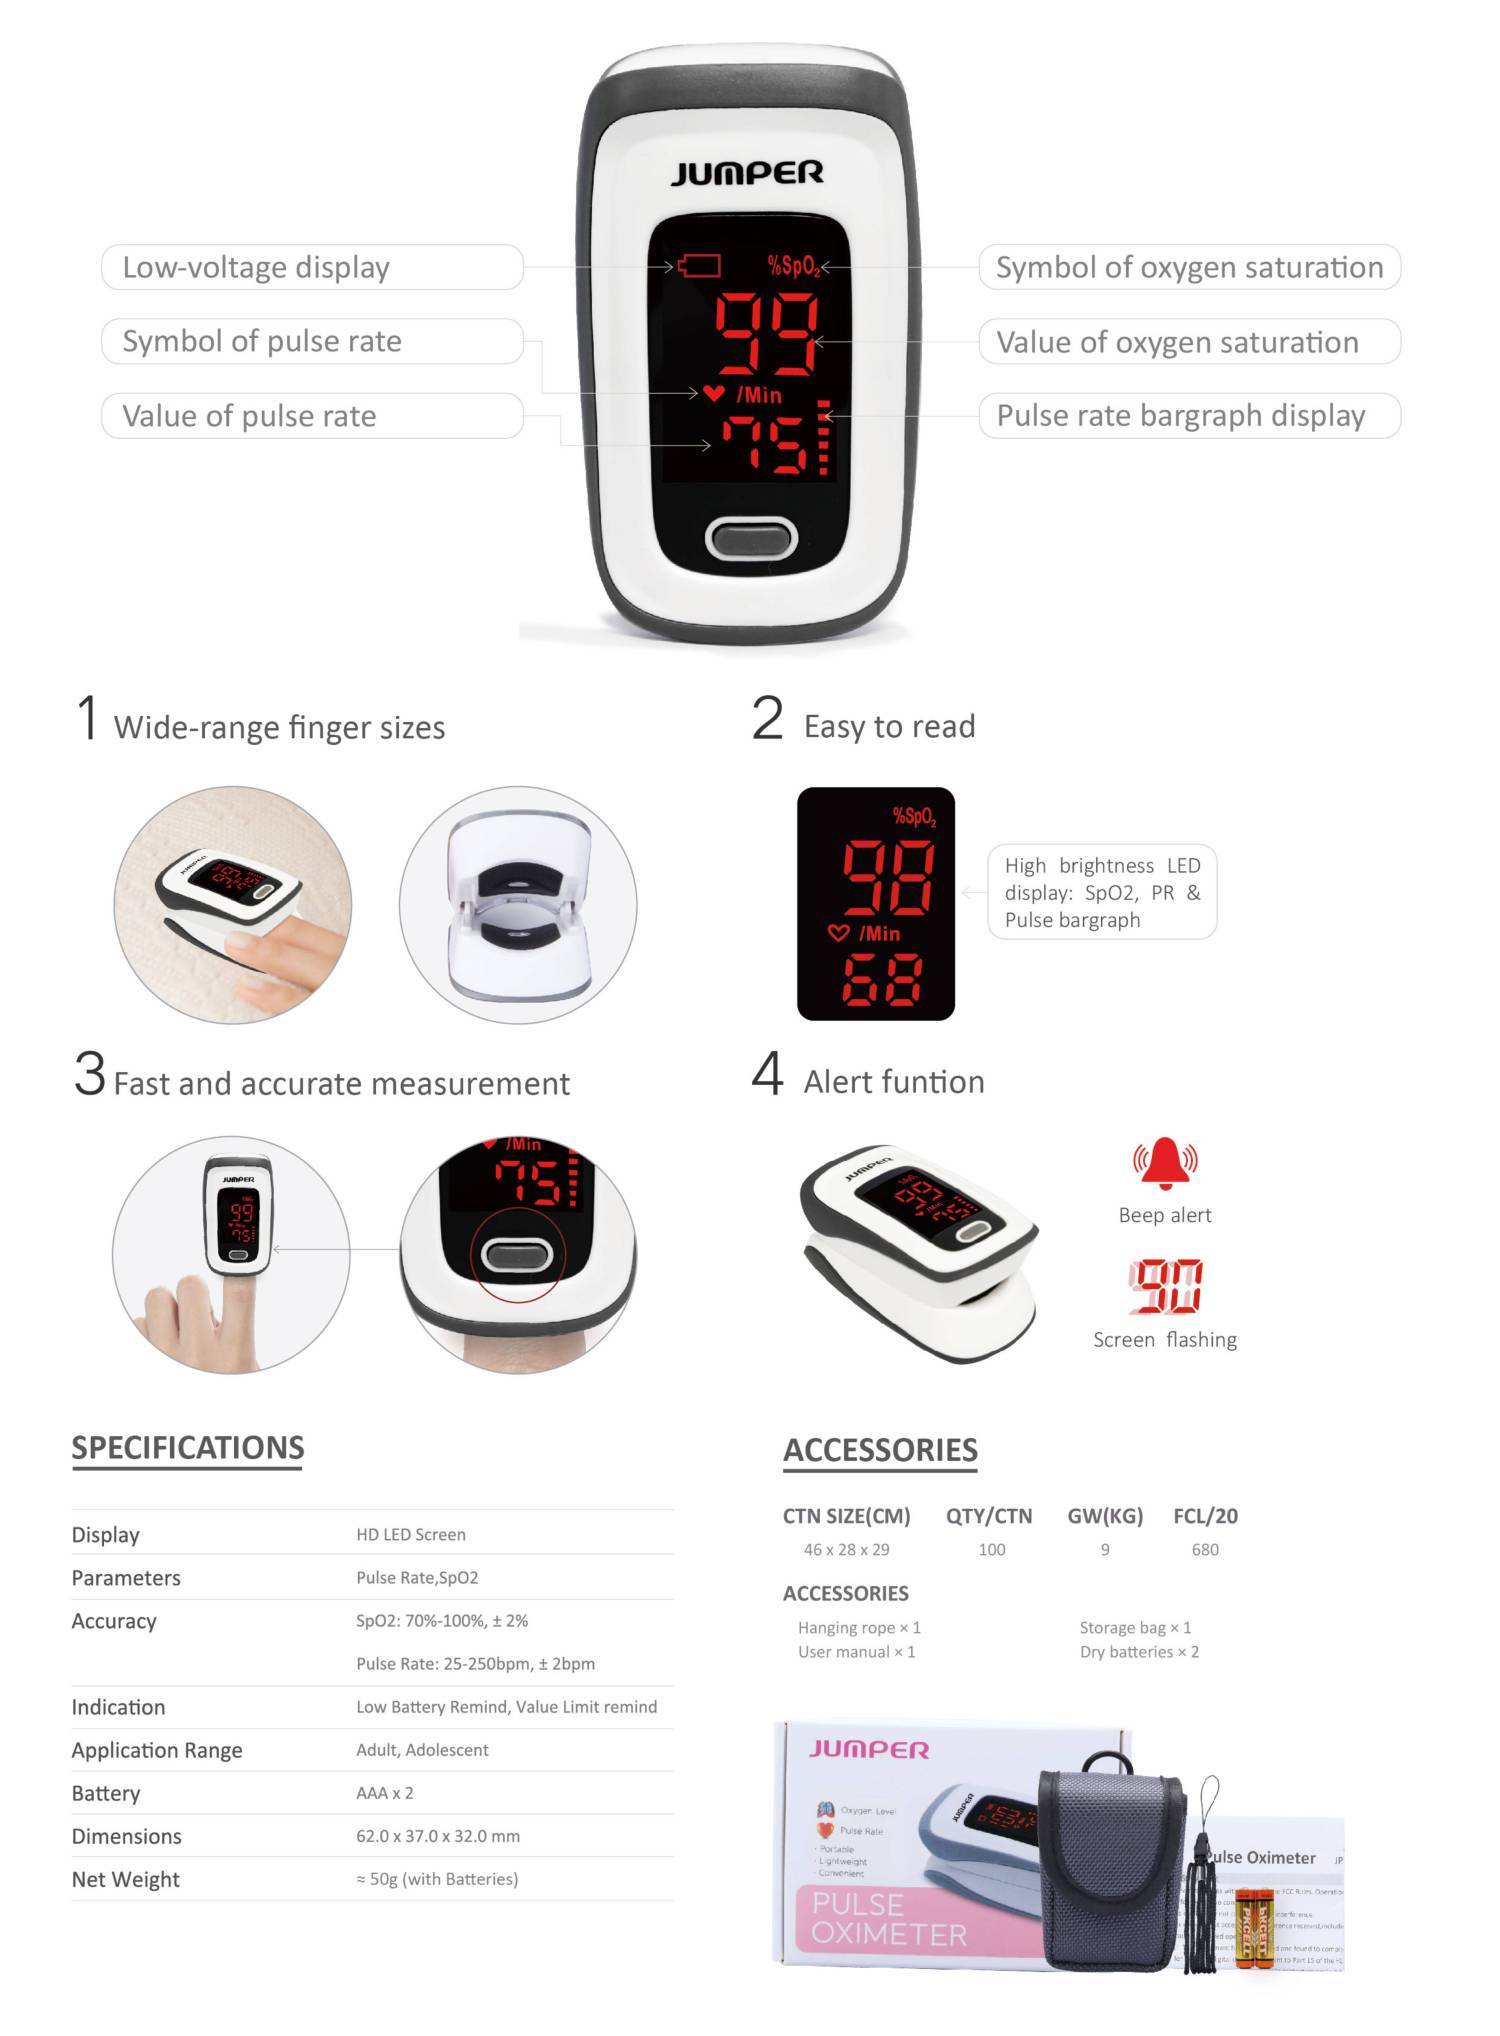 Jumper LED Version Pulse Oximeter (JPD-500E) (MDA certified - 1 year warranty) 1s - DoctorOnCall Online Pharmacy